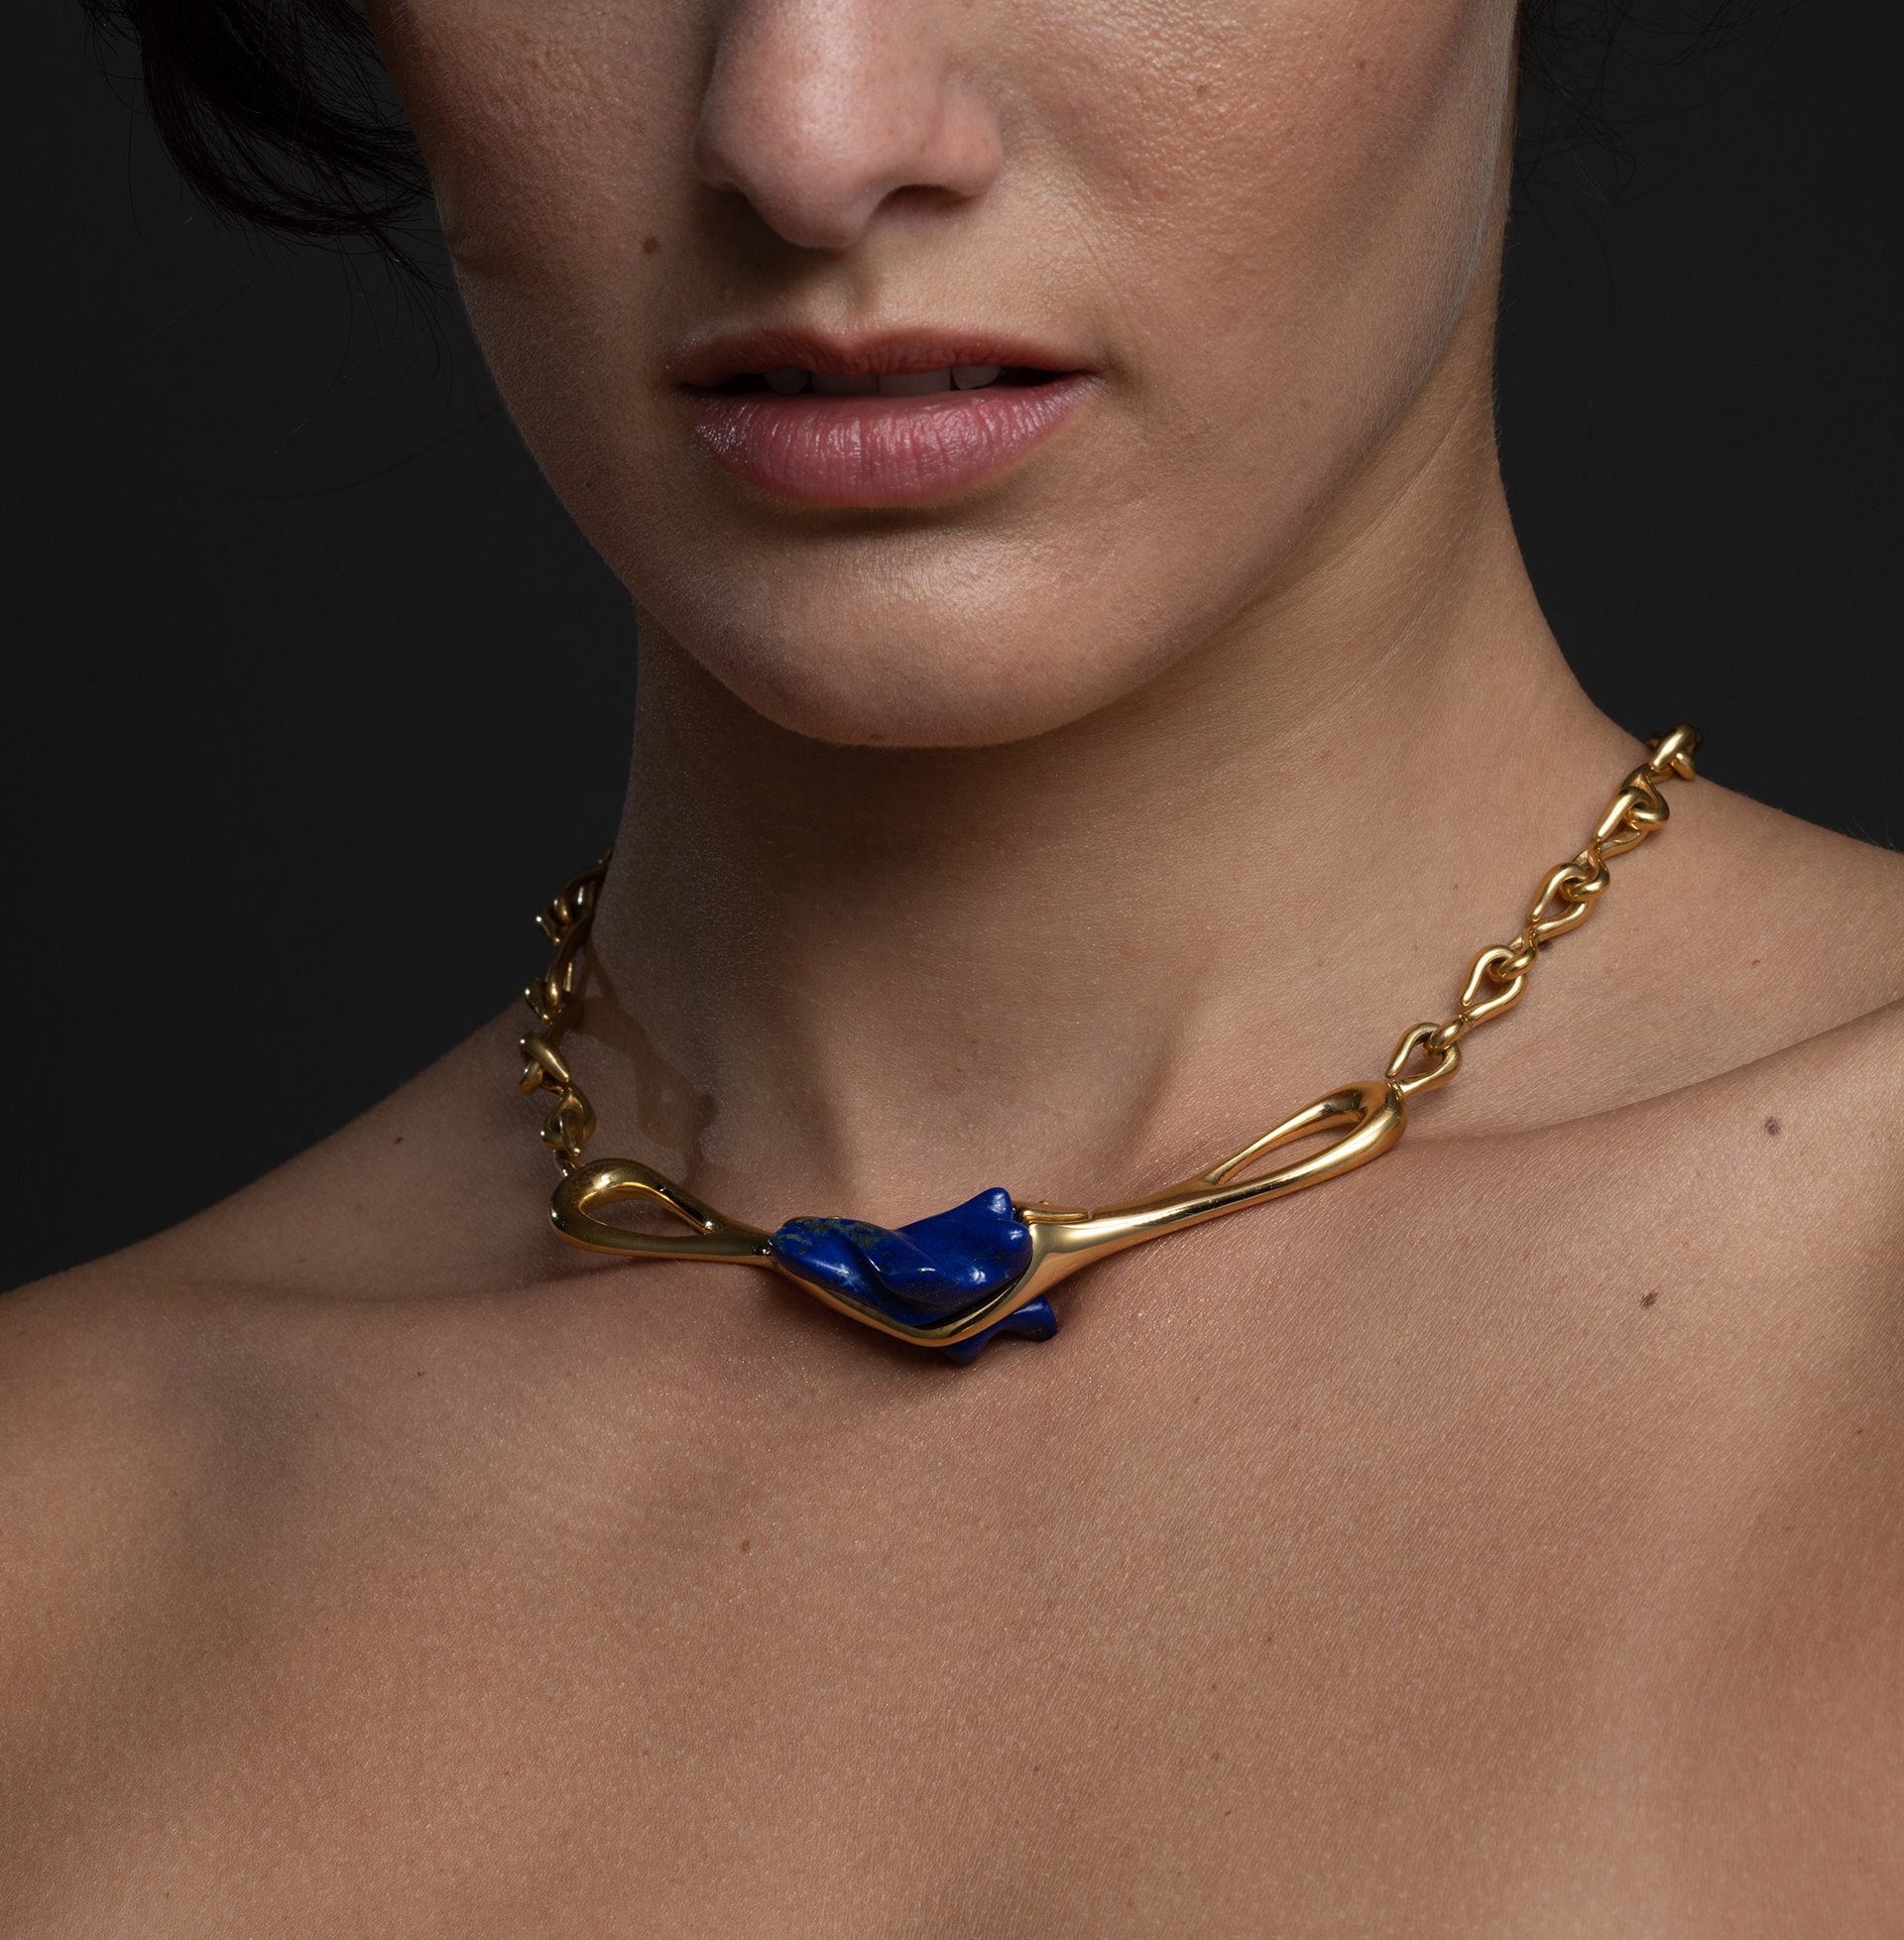 DULCE-egypt-necklaces-collection-julio-martinez-barnetche-marion-friedmann-gallery-LR-egypt26-cut.jpg